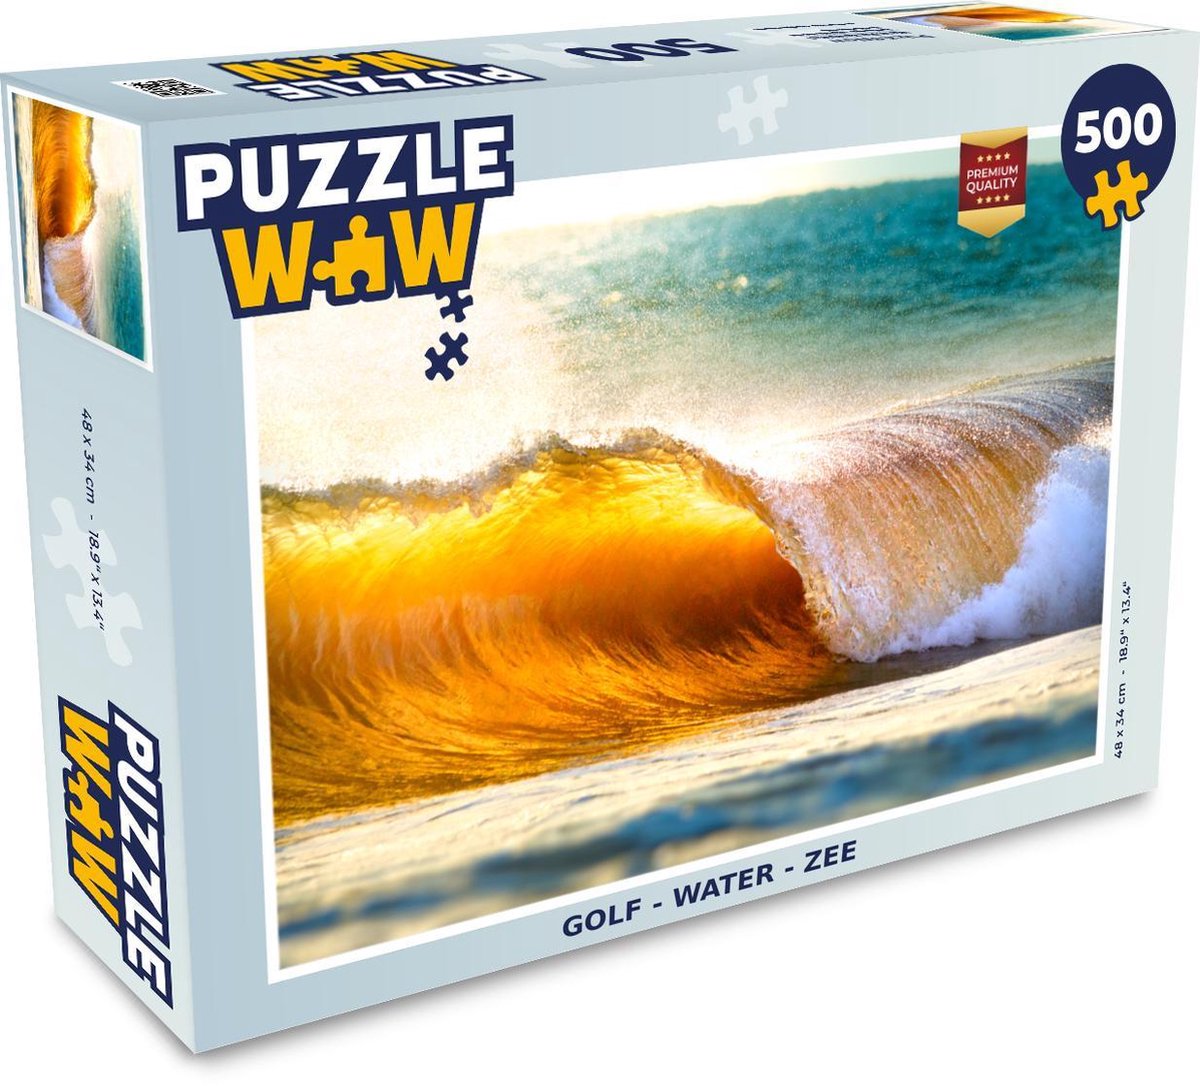 Afbeelding van product PuzzleWow  Puzzel Golf - Water - Zee - Legpuzzel - Puzzel 500 stukjes